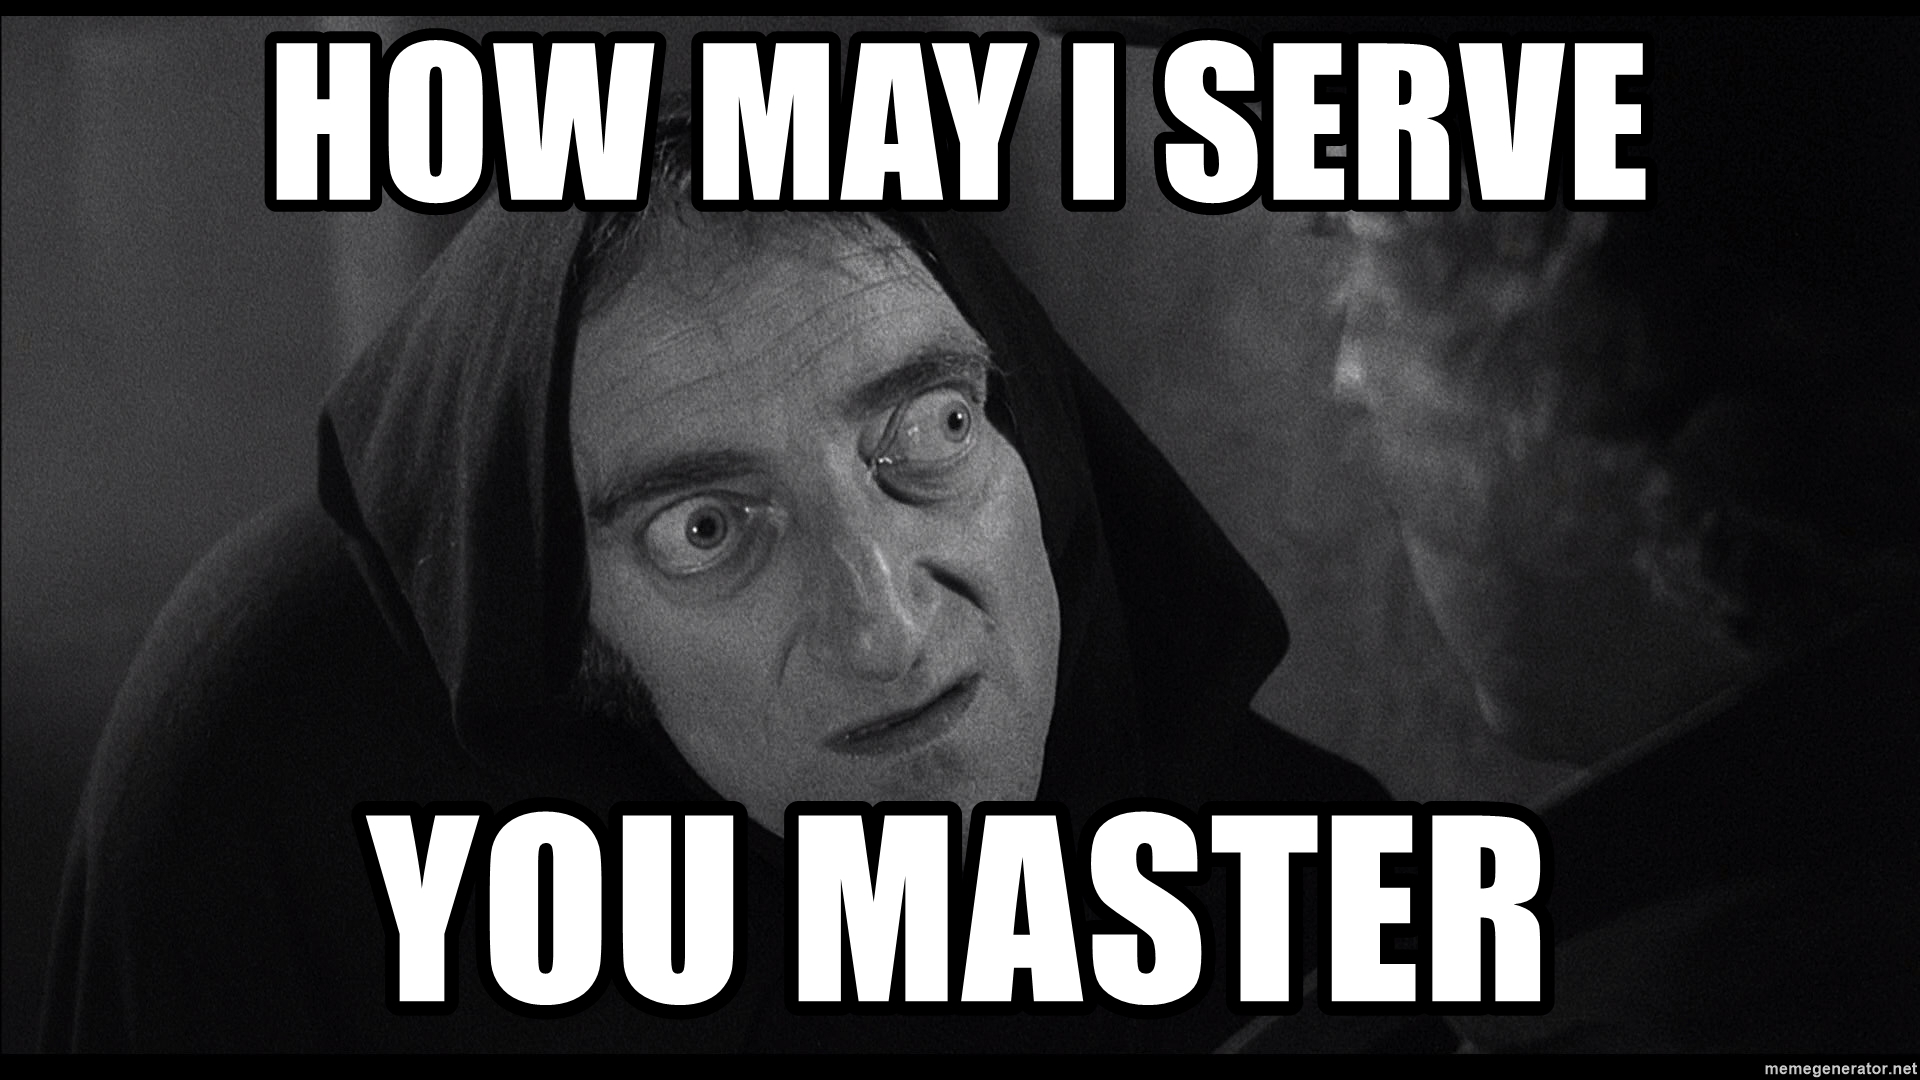 Igor asking "How may I serve you master."